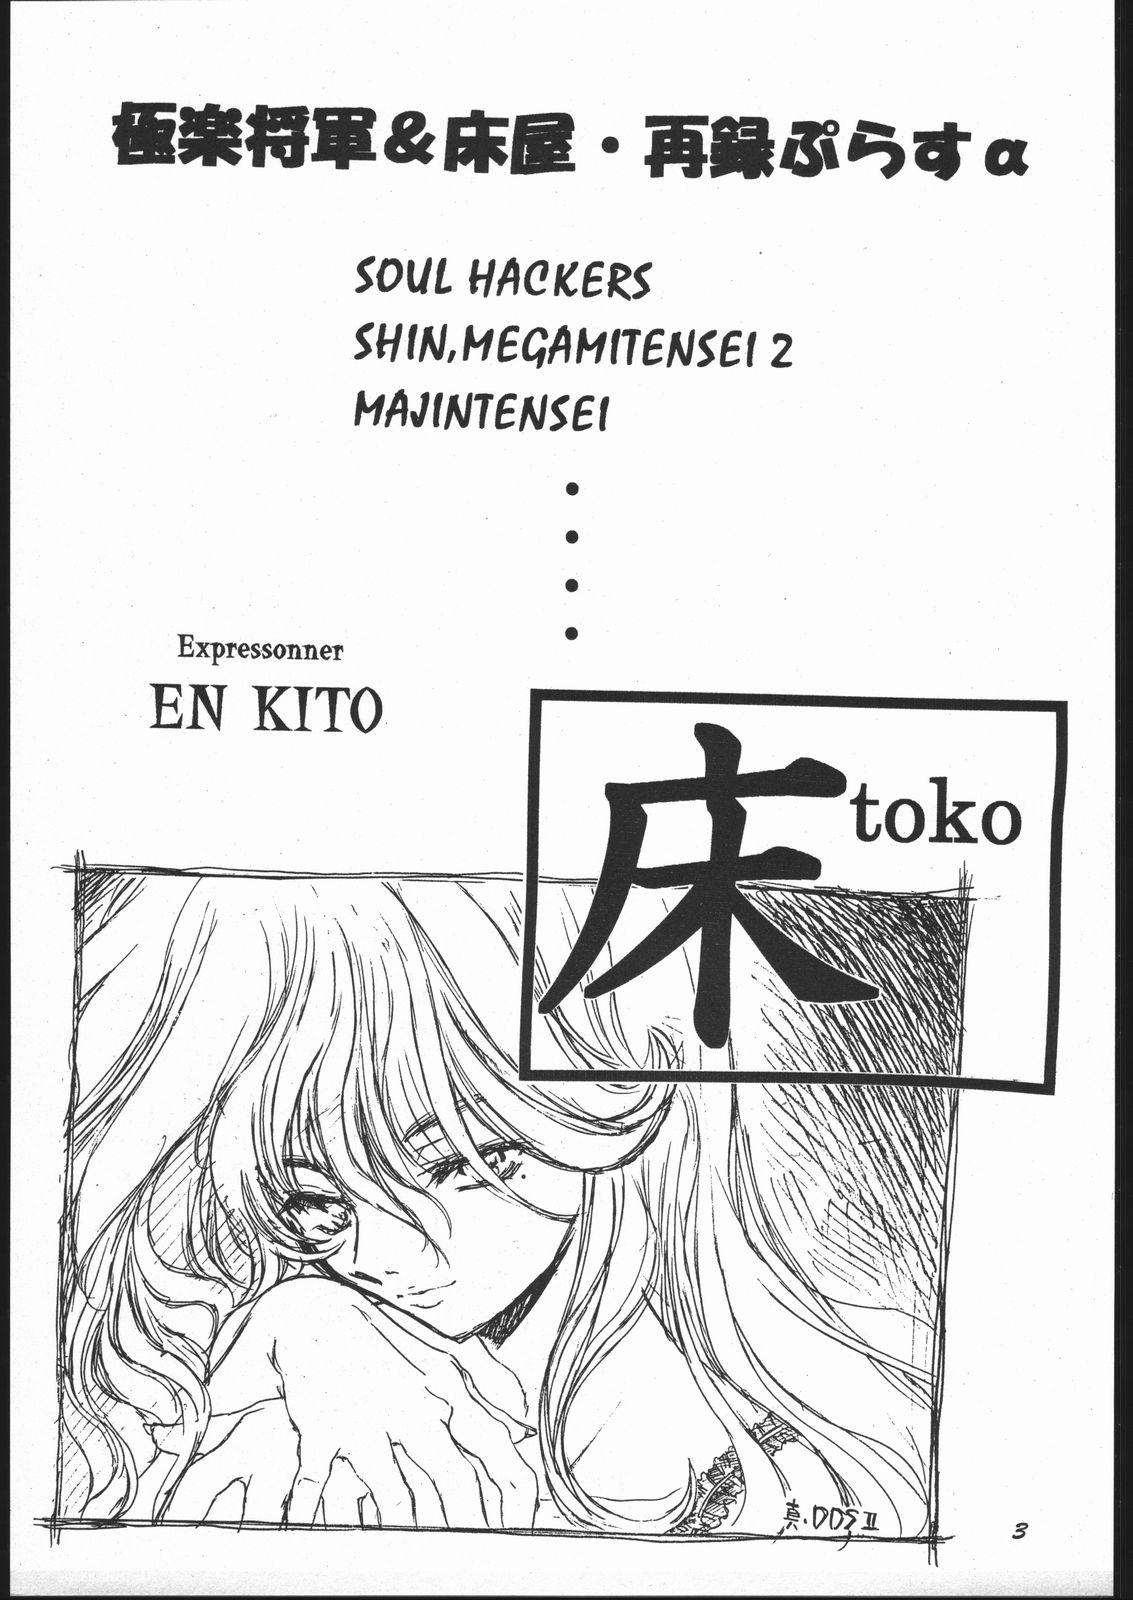 Teacher Toko - Shin megami tensei Devil summoner soul hackers Groupfuck - Page 2